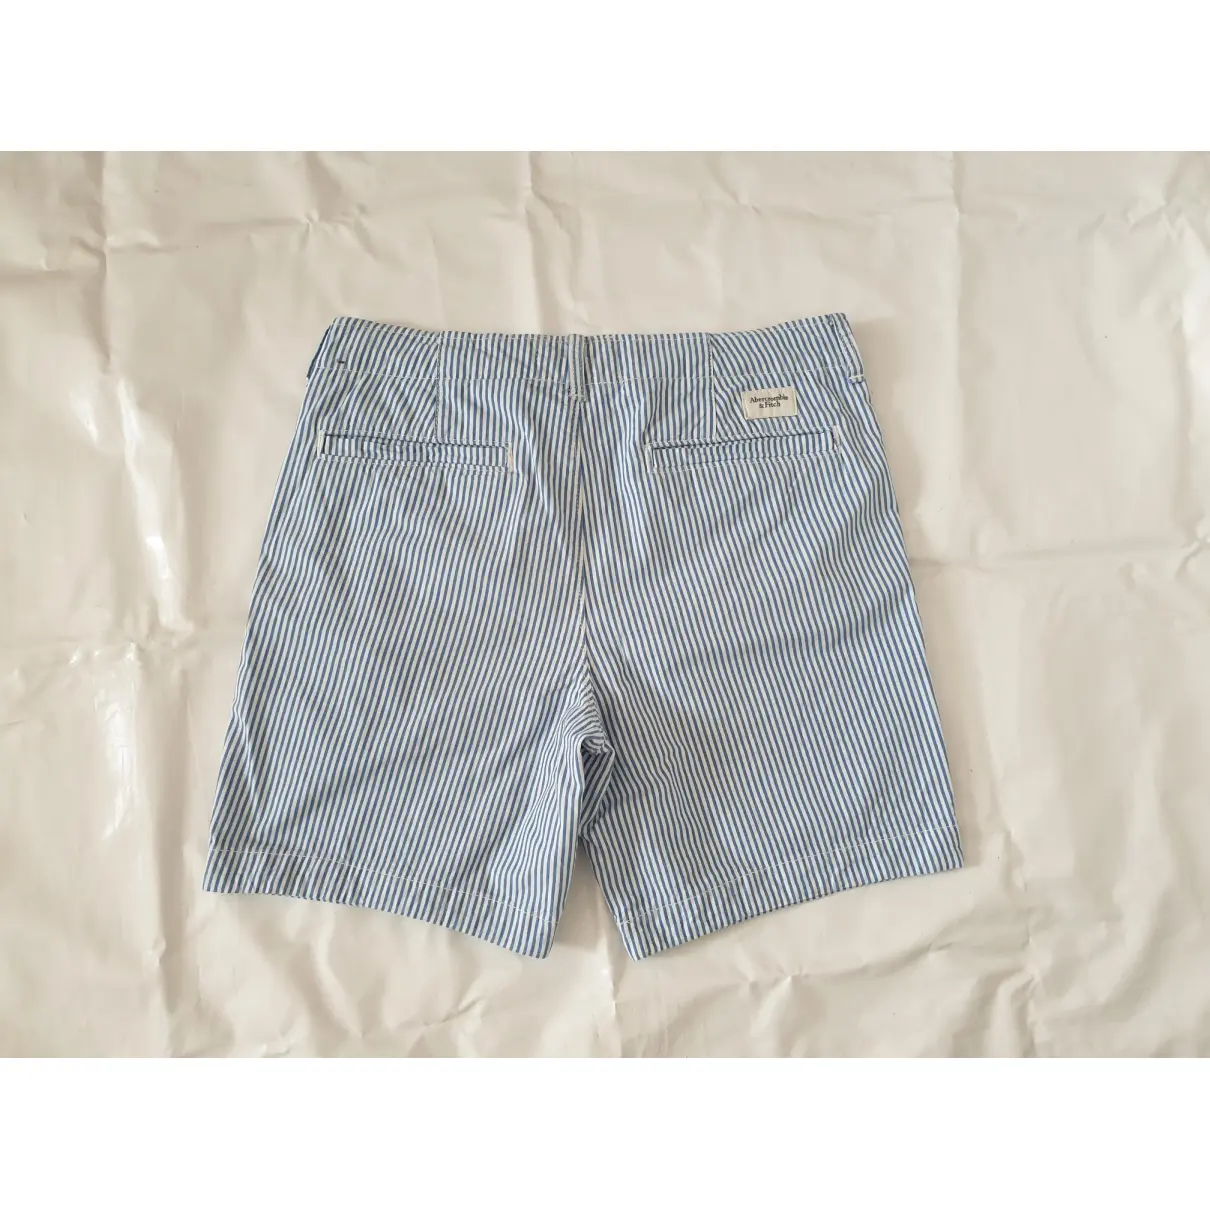 Buy Abercrombie & Fitch Blue Cotton Shorts online